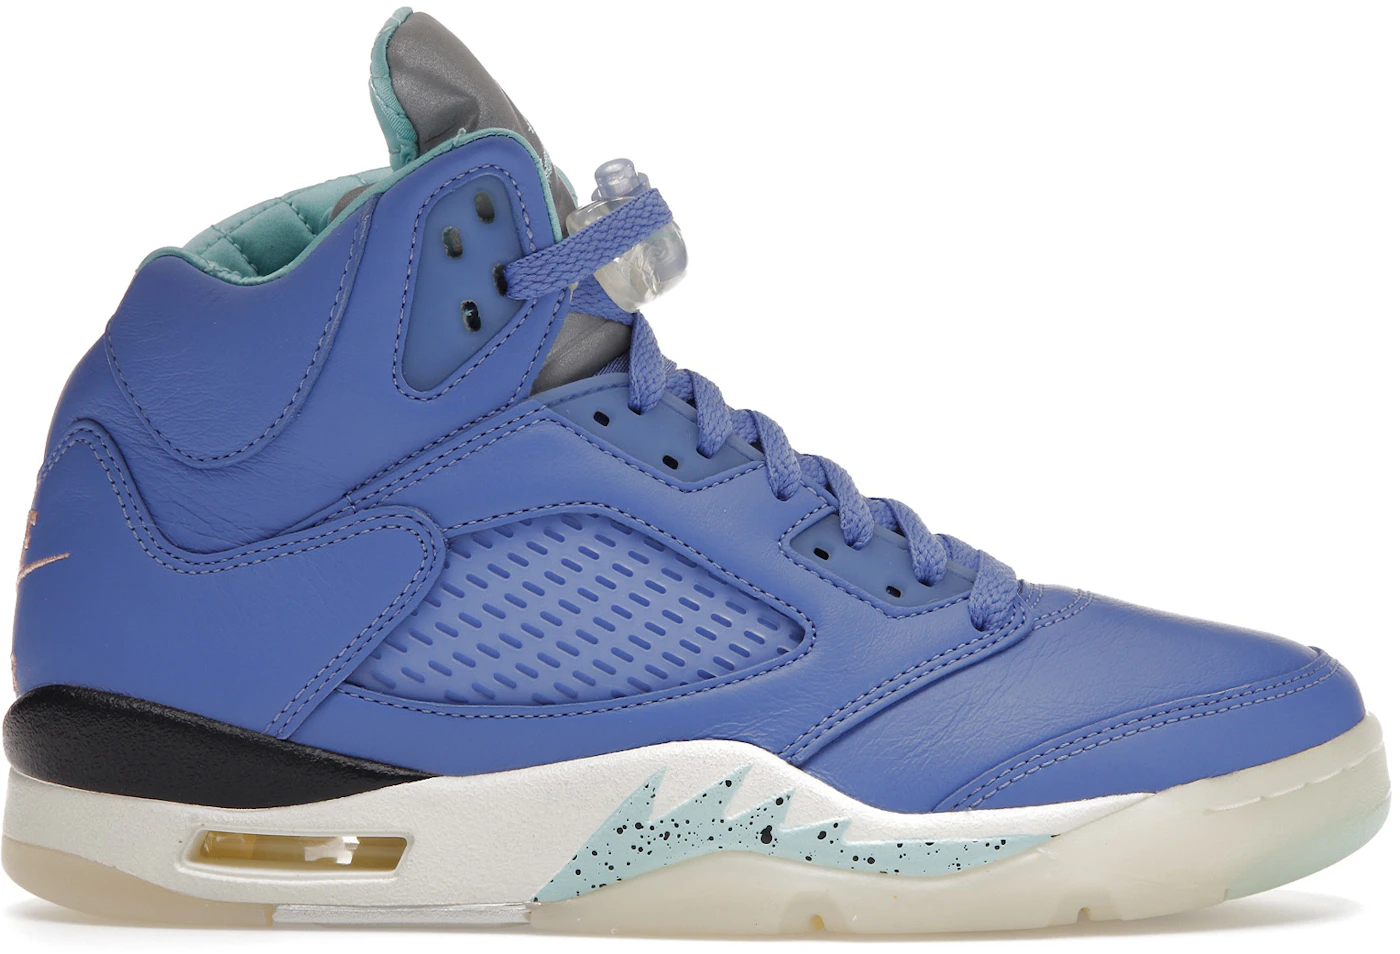 Air Jordan 5 x DJ Khaled Men's Shoes